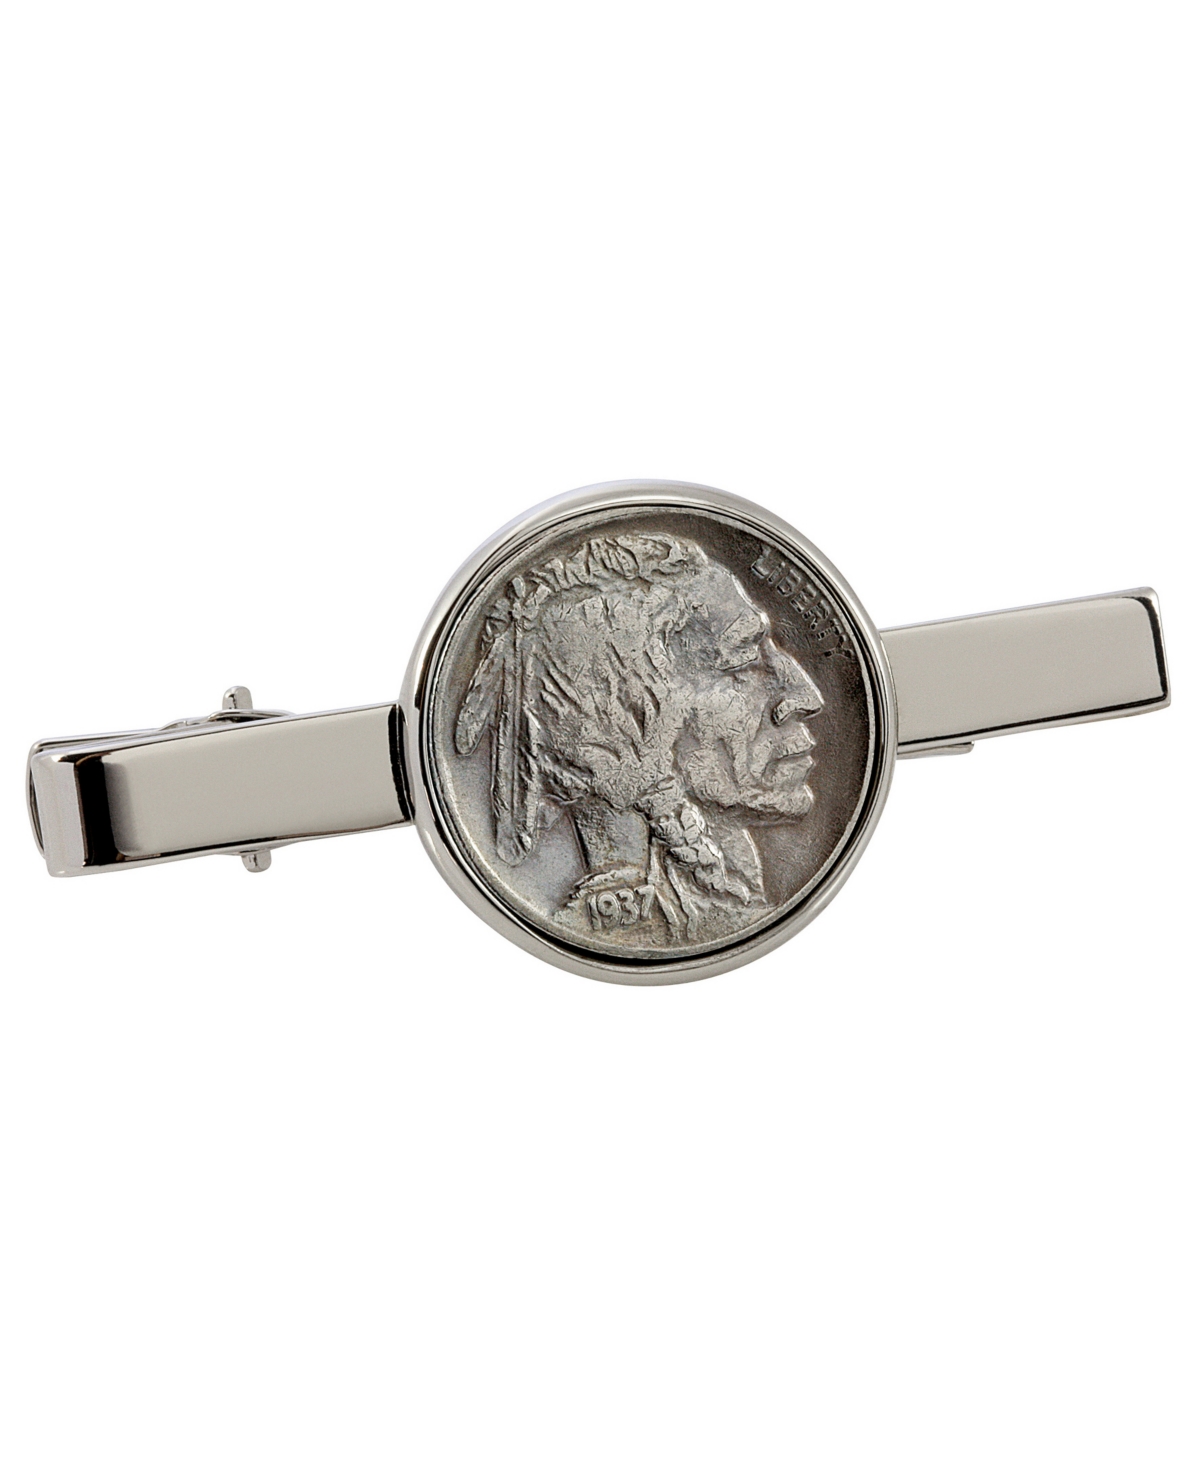 Buffalo Nickel Coin Tie Clip - Silver